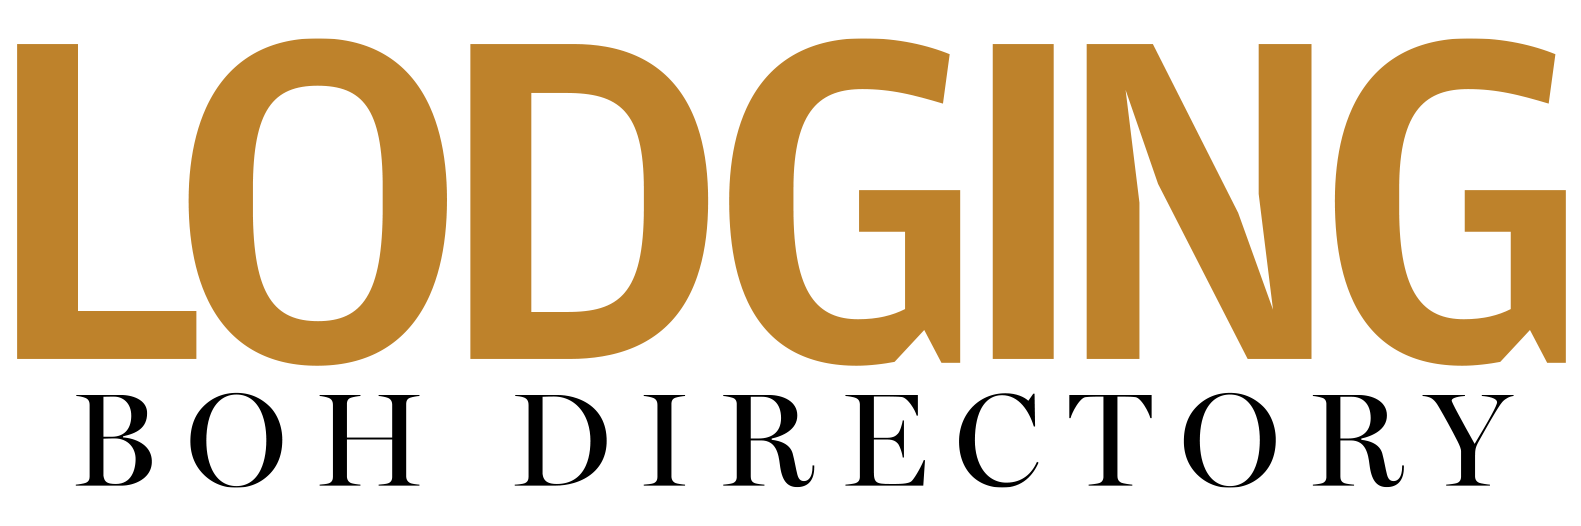 cropped-BoHD-logo2.png